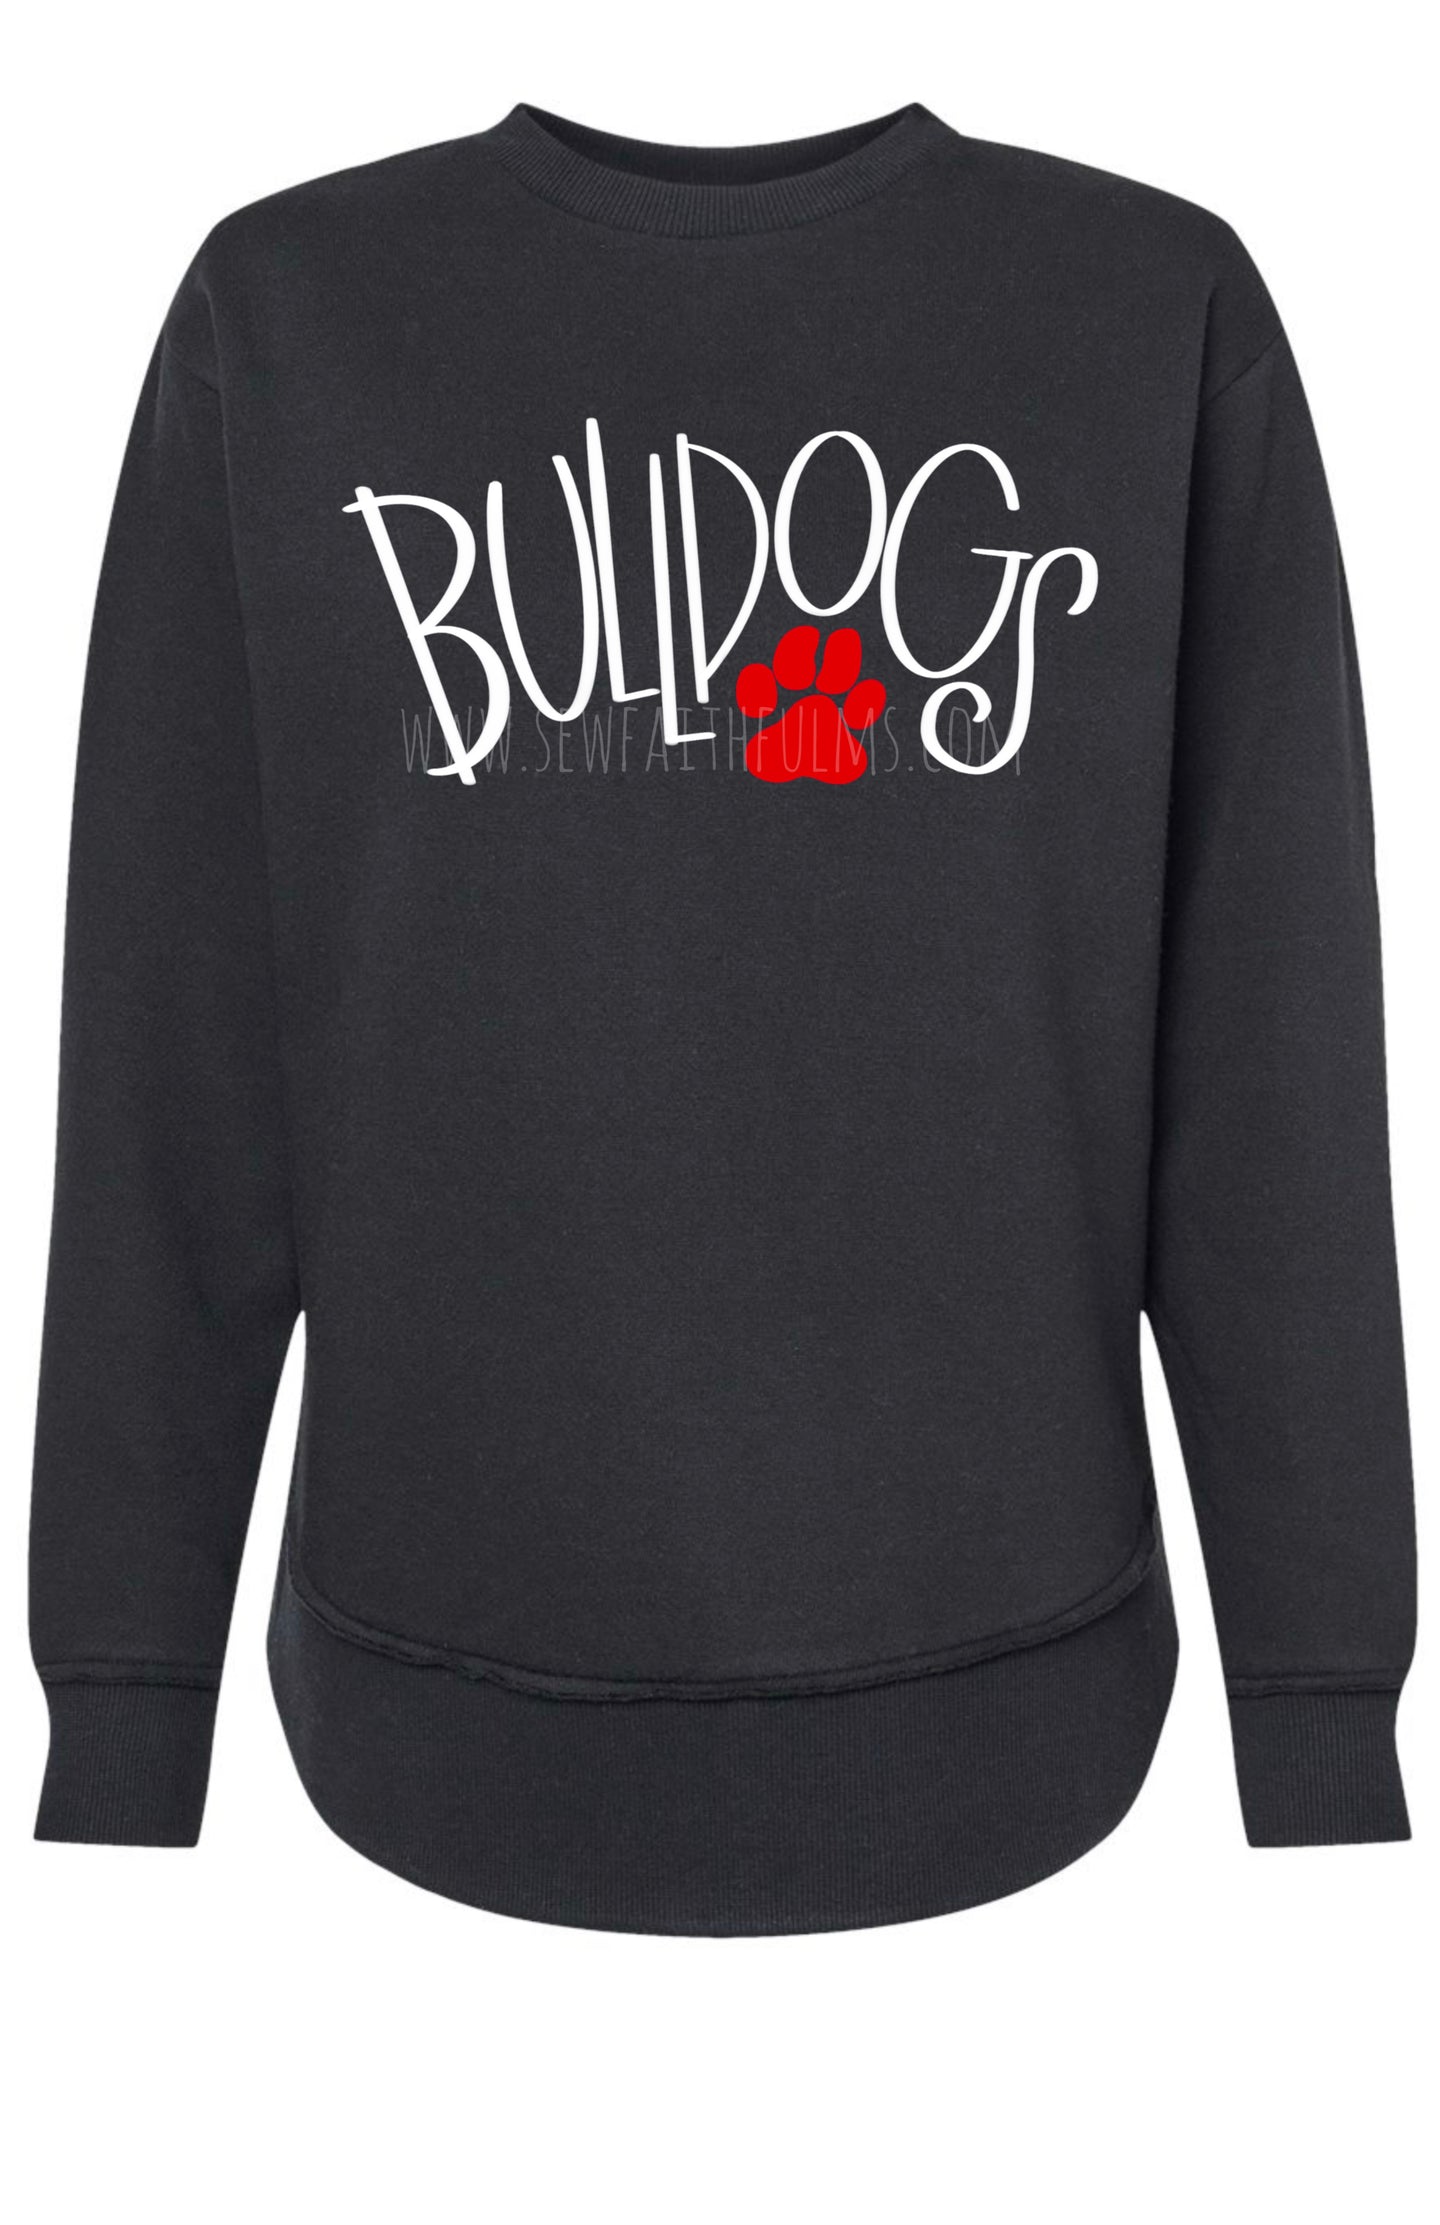 Bulldogs Hand Lettered Ladies sweatshirt